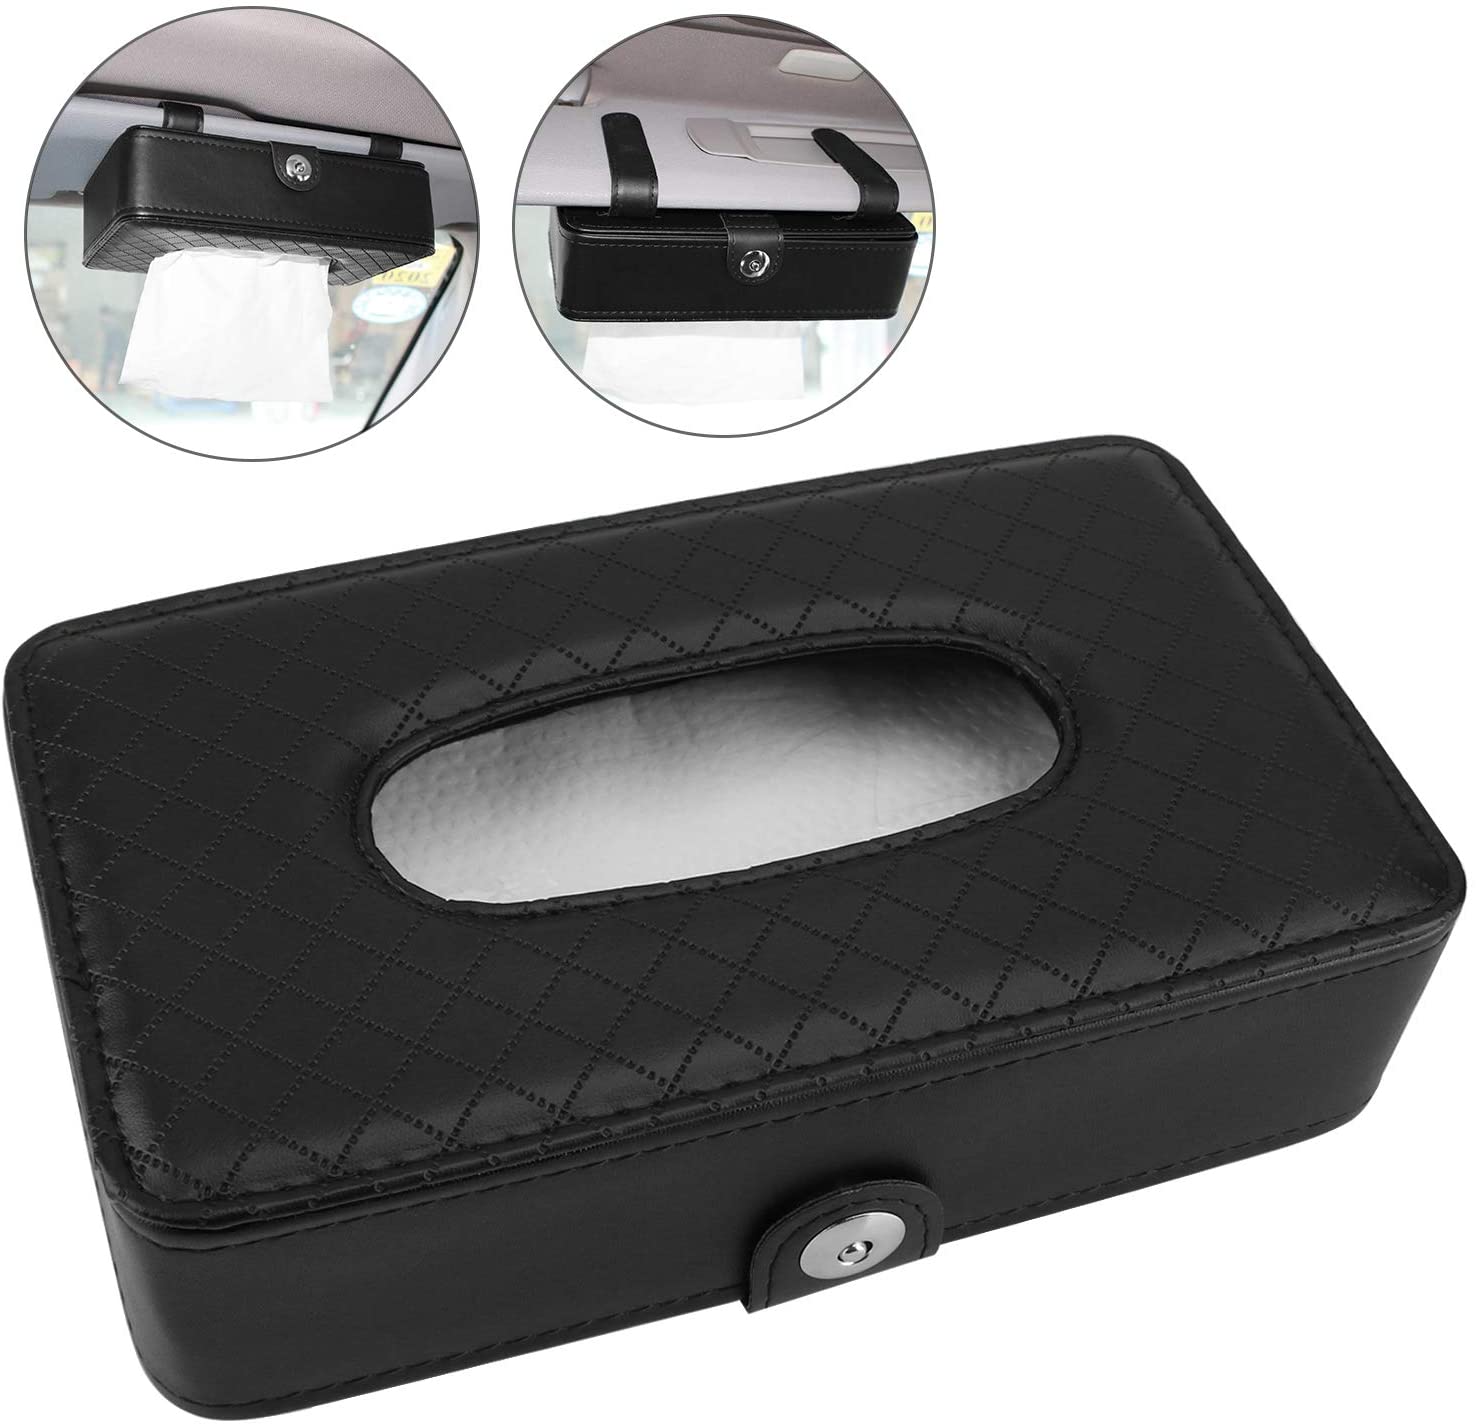  Car Tissue Holder Box,Car Hanging Tissue Holder,Car Central  Armrest Tissue Box,Car Sun Visor Tissue Holder,Car Tissue Box Multi-use Car  Tissue Paper Box PU Leather Backseat Car Accessories (Black) : Automotive